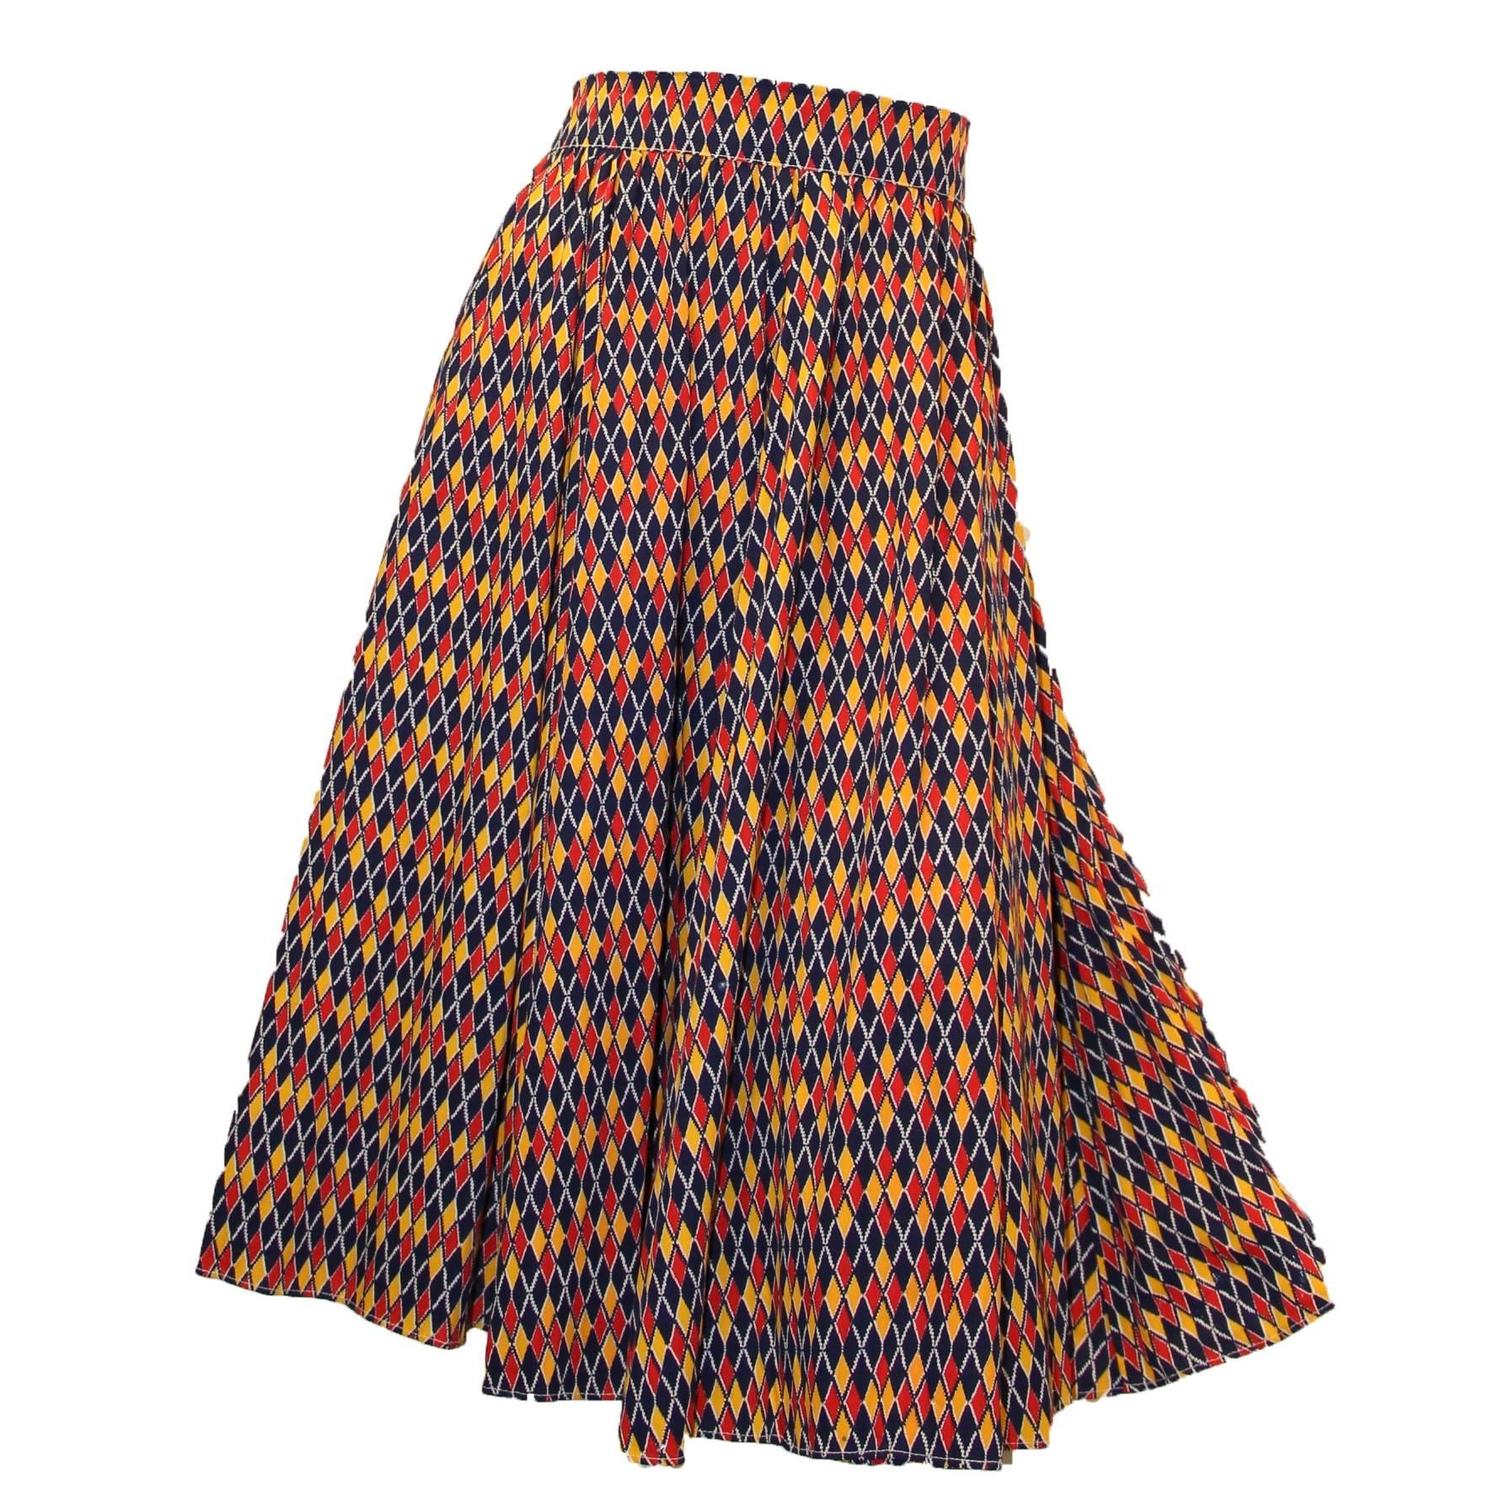 1950s Argyle Print Circle Skirt For Sale at 1stdibs